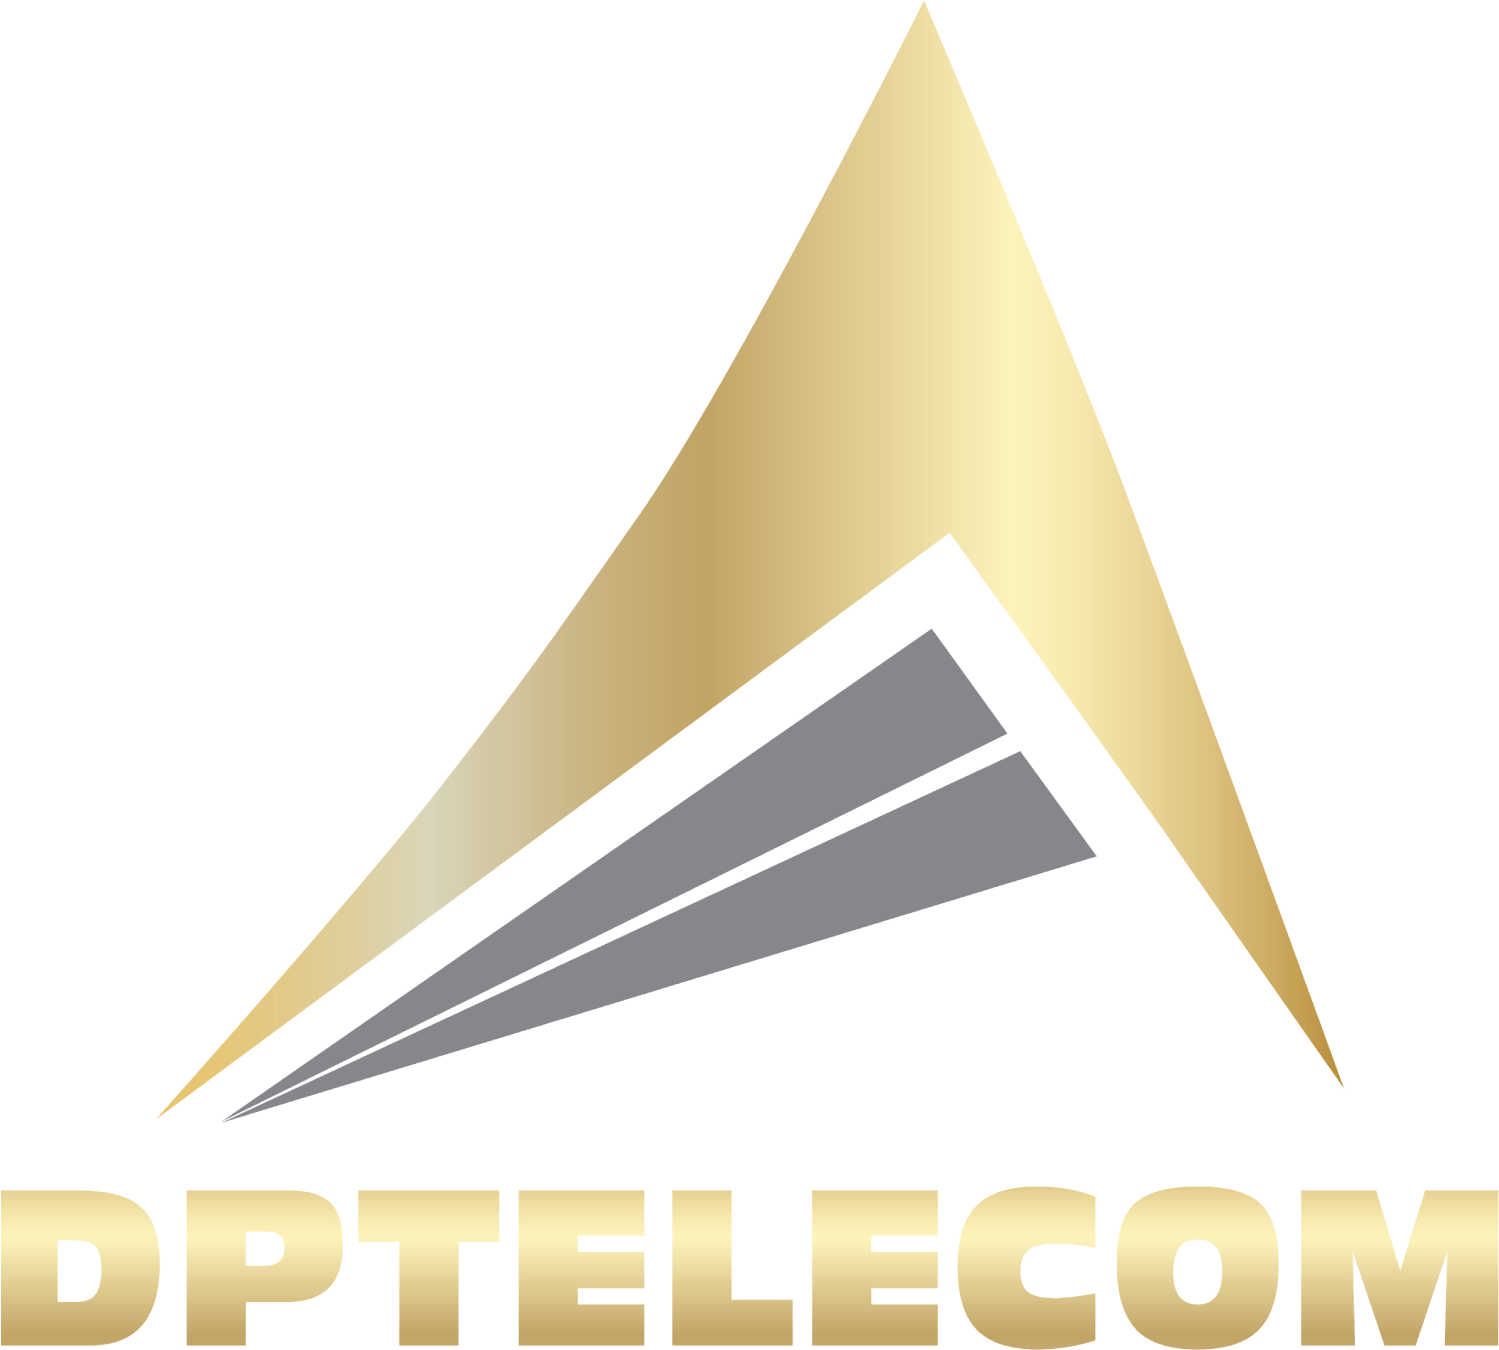 DPTELECOM Logo Transparant 1df641f2 494d 4f8e a544 4ab99a2fa452